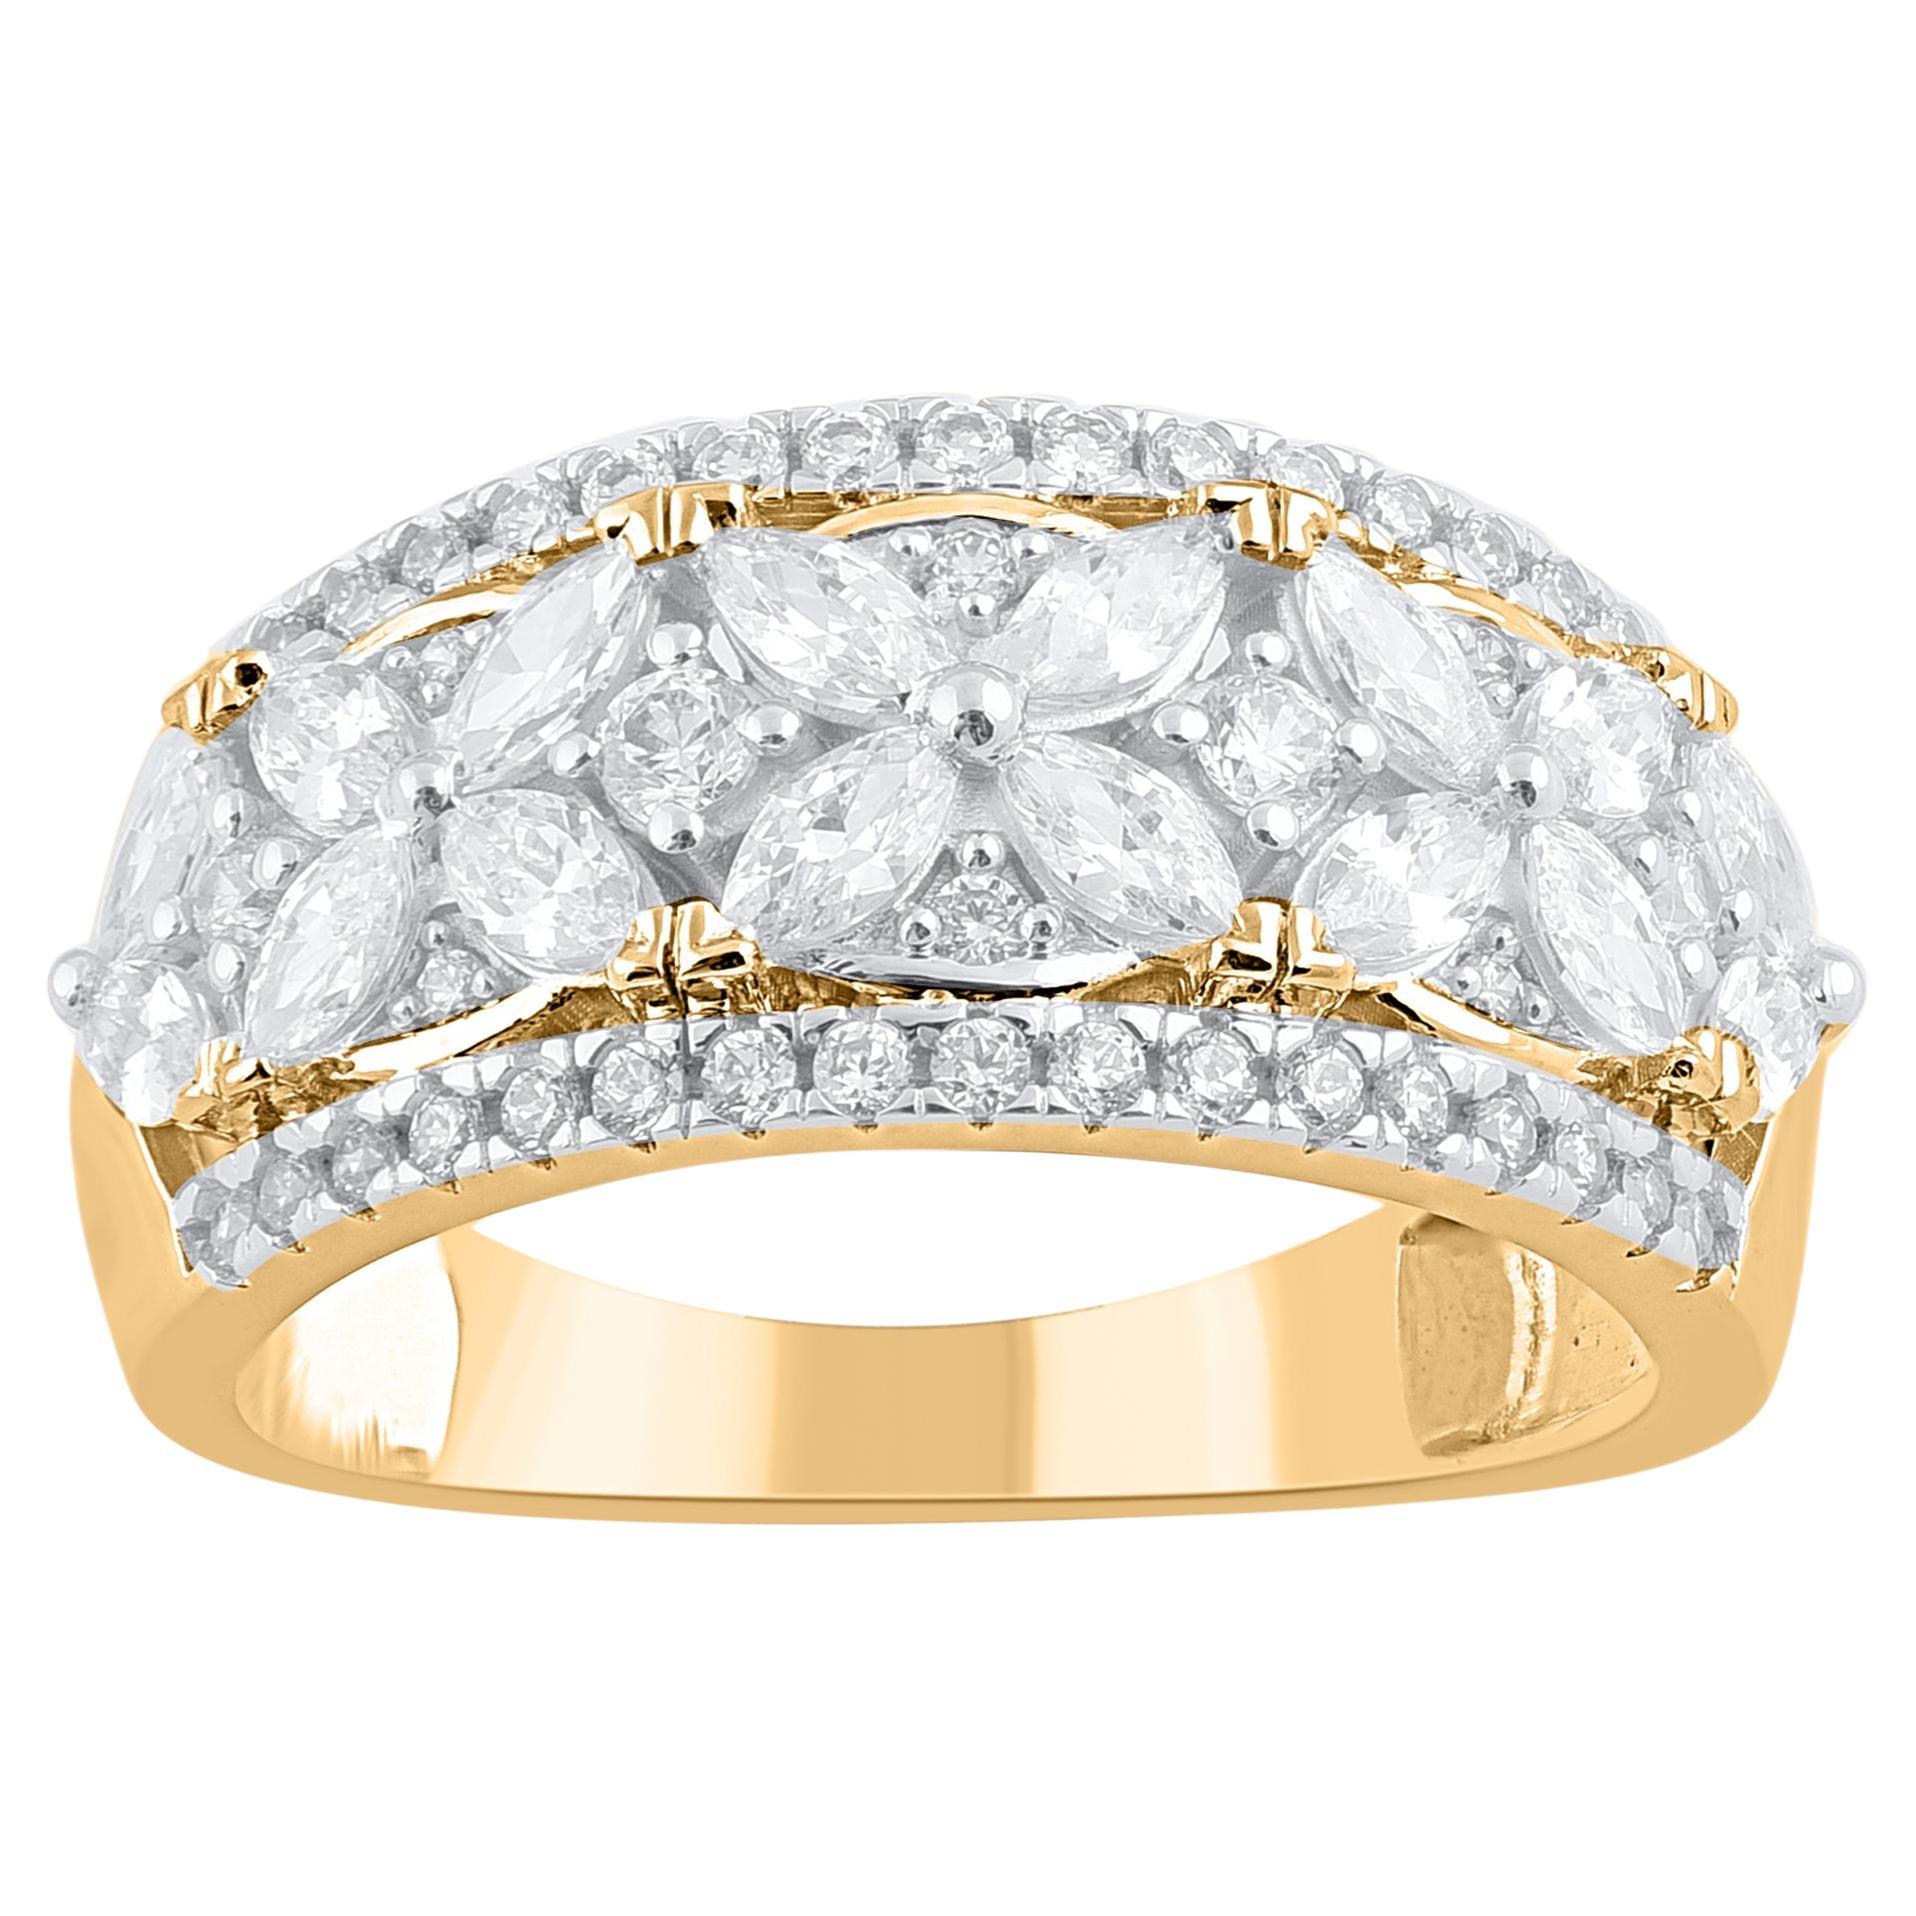 TJD 1.50 Carat Natural Diamond 18KT Gold Vintage-Style Flower Wedding Band Ring (anneau de mariage en forme de fleur en or 18KT)